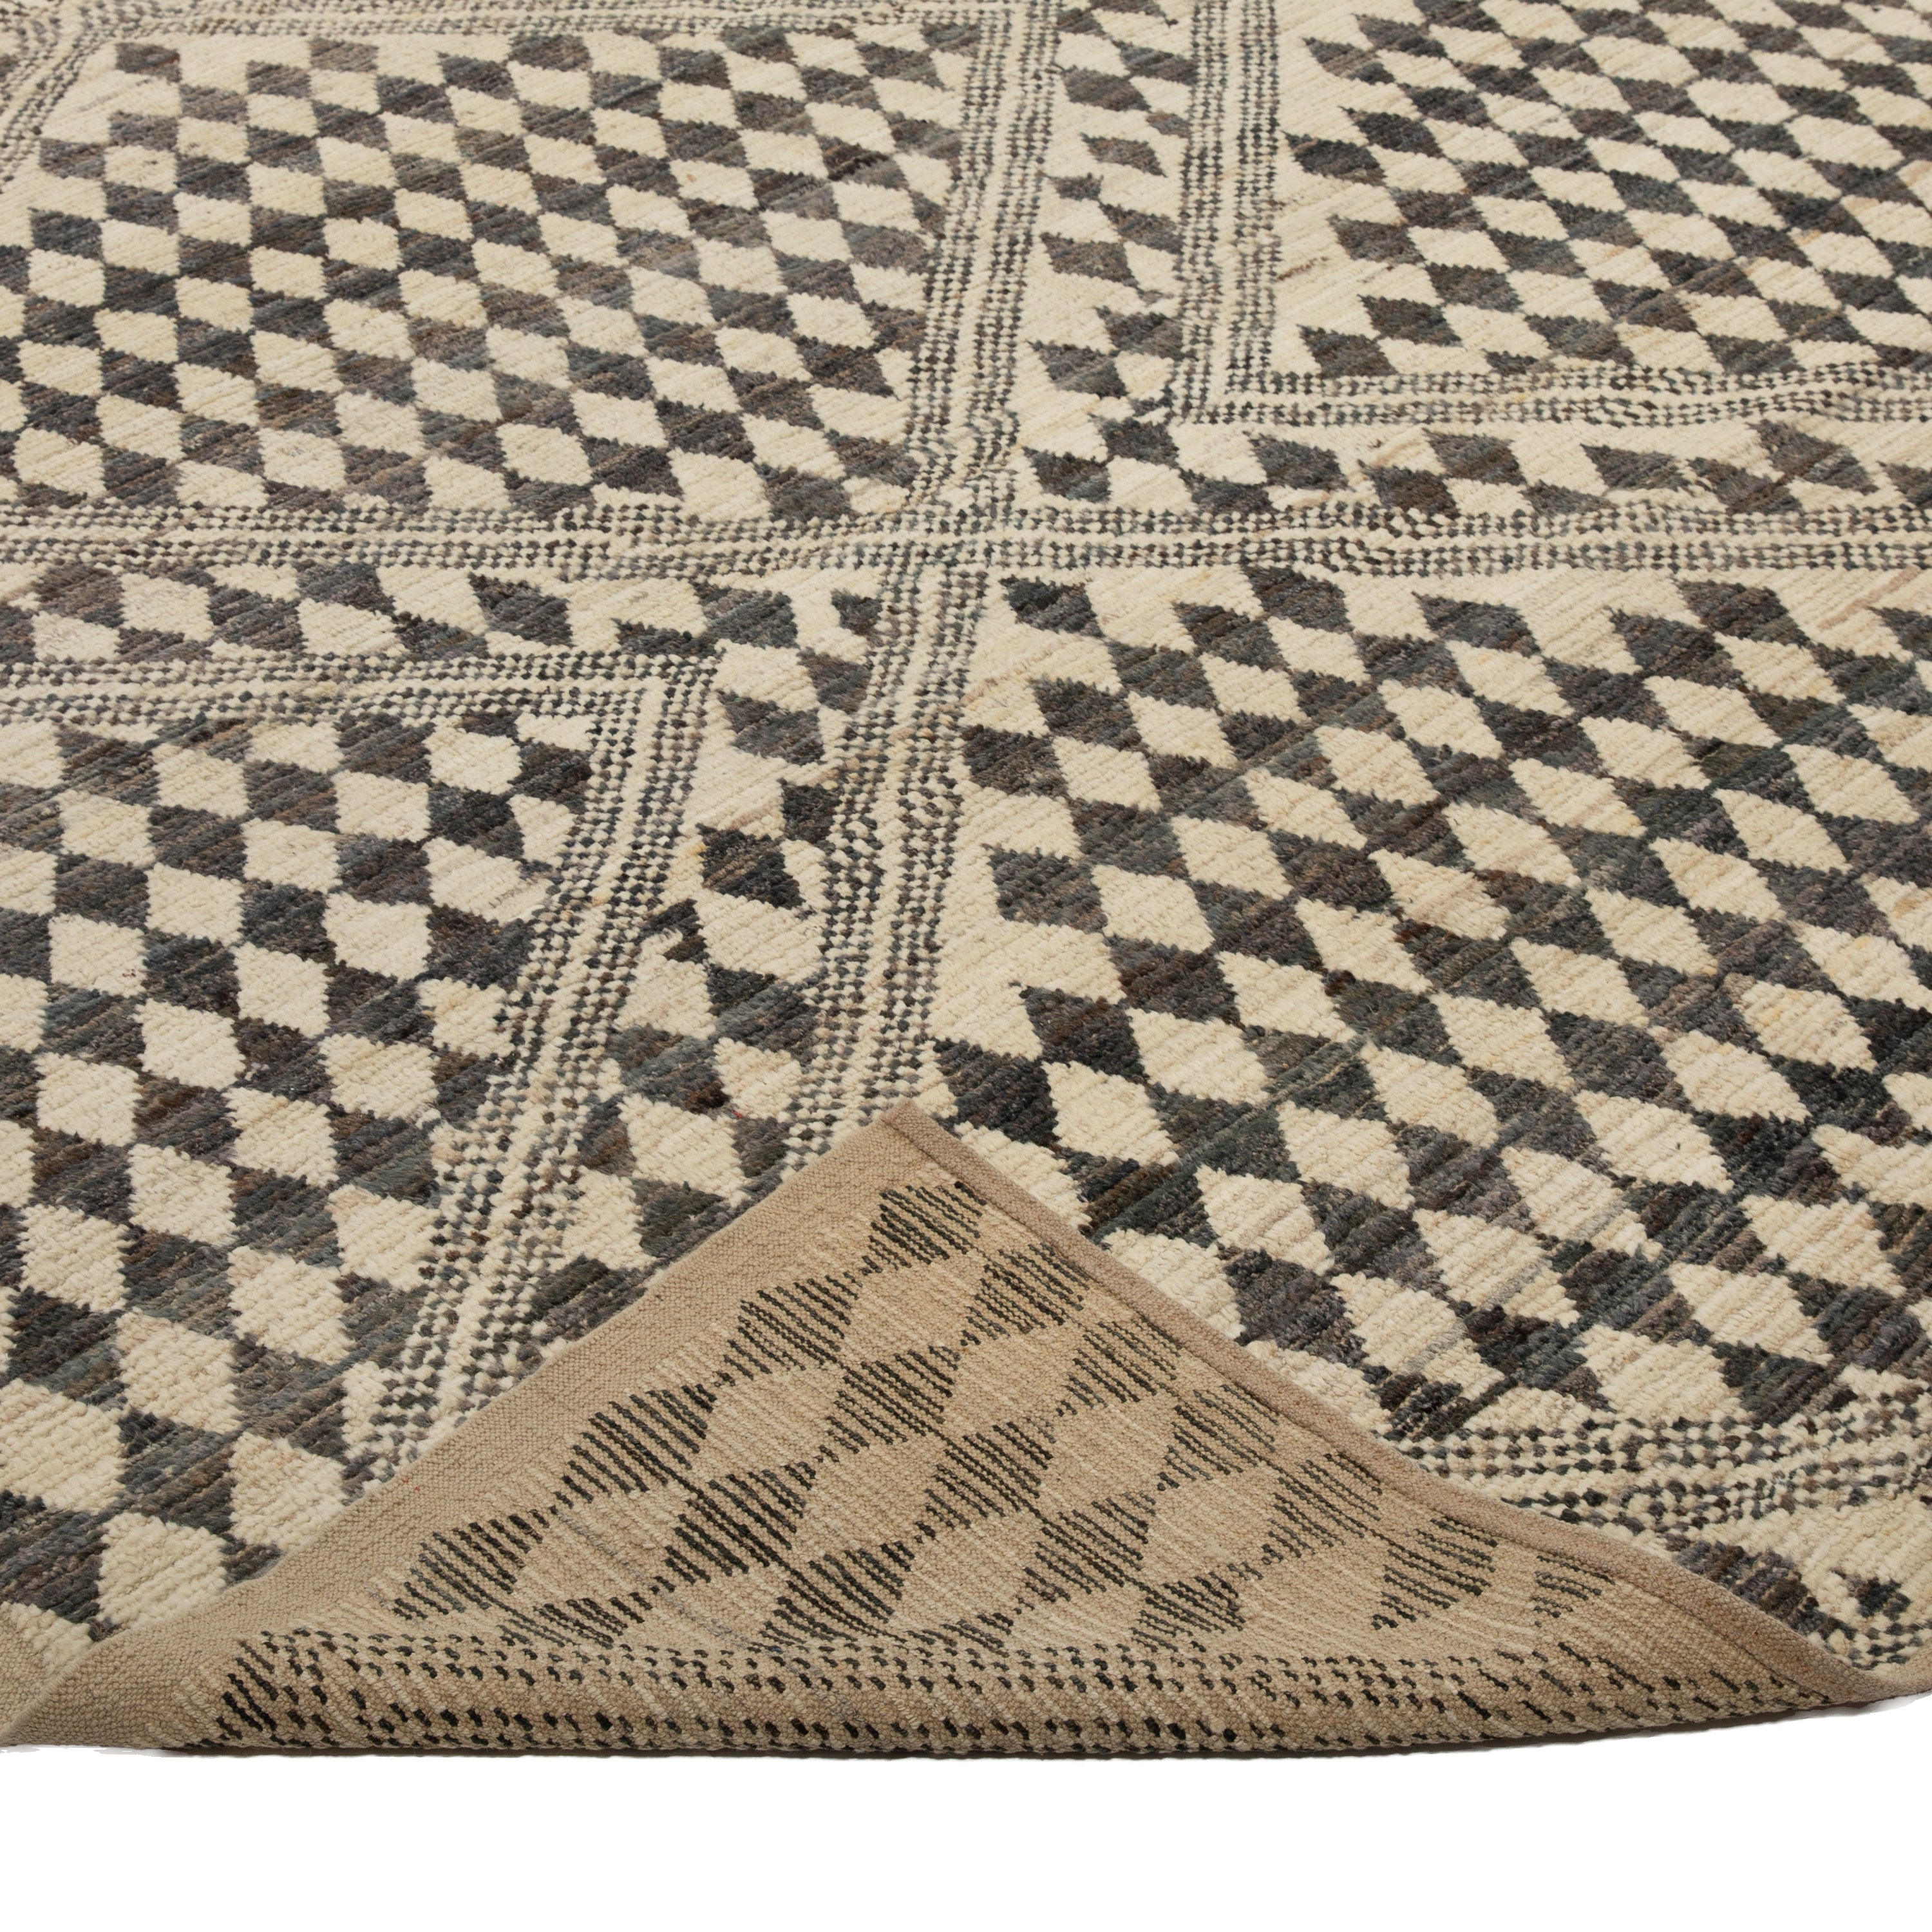 Zameen Patterned Modern Wool Rug - 13'10" x 16'3" Default Title